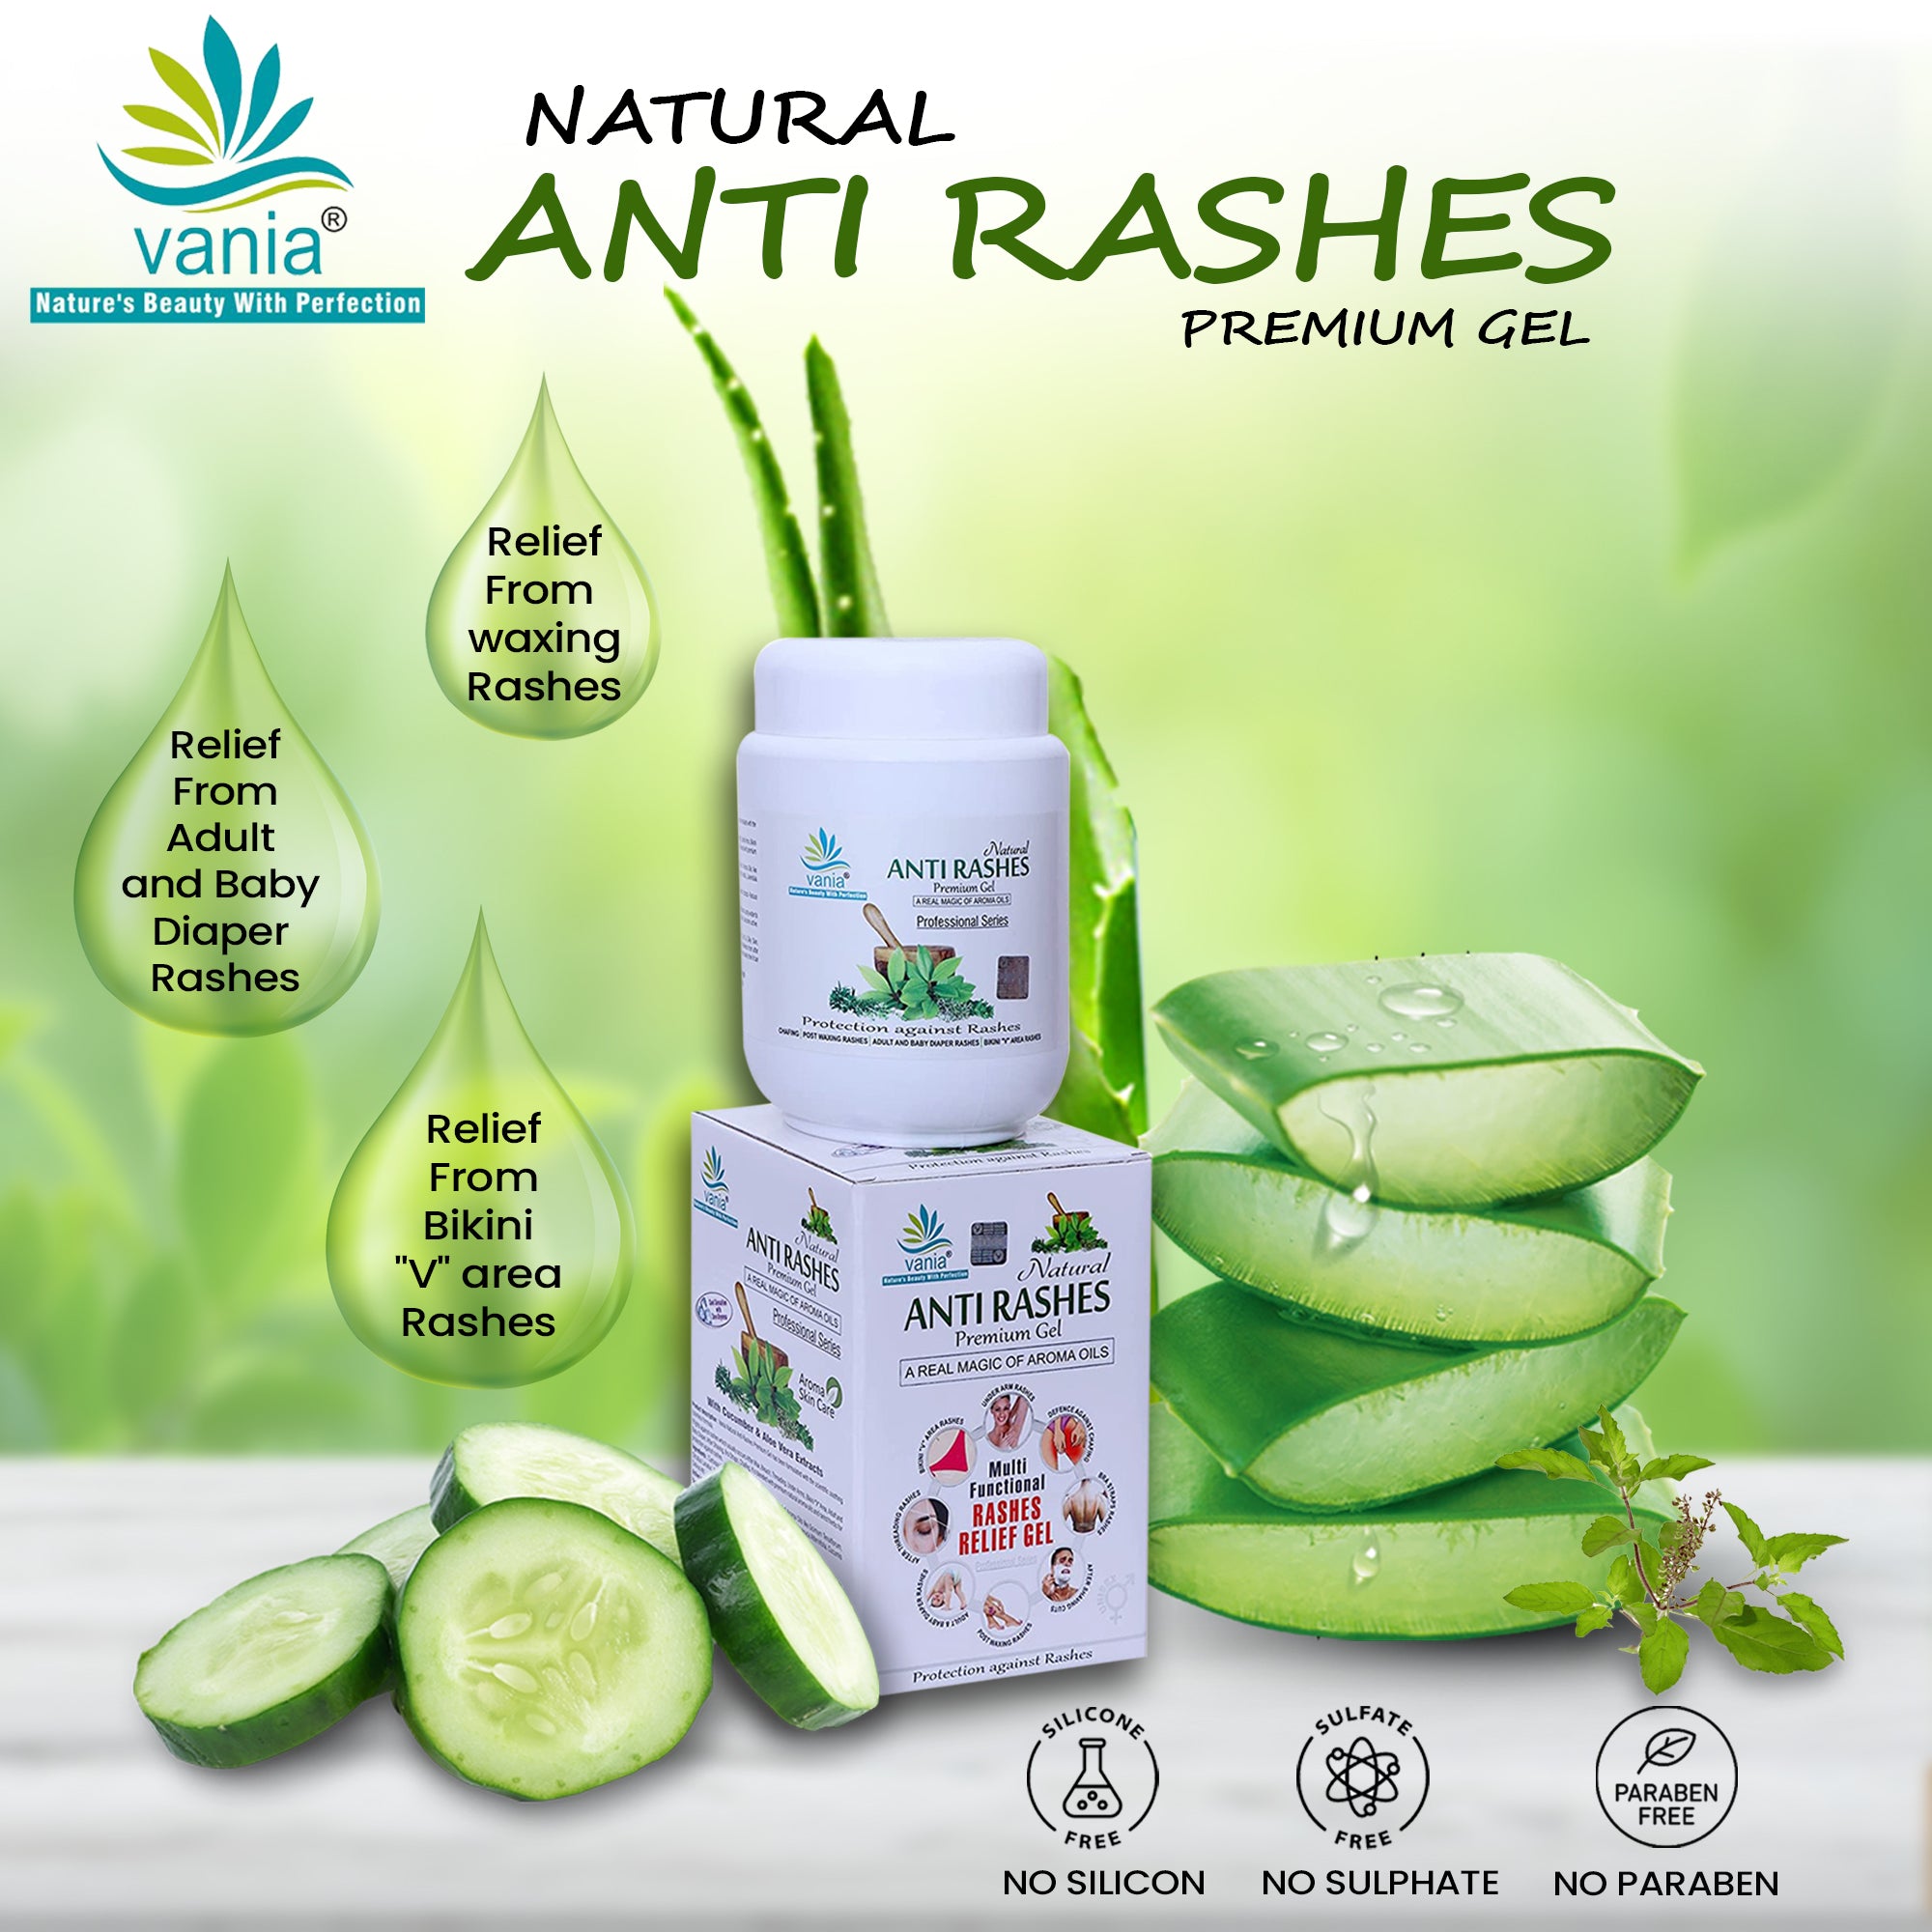 Vania Natural Anti Rashes Premium Gel 1Kg,Pre,After wax gel,waxing